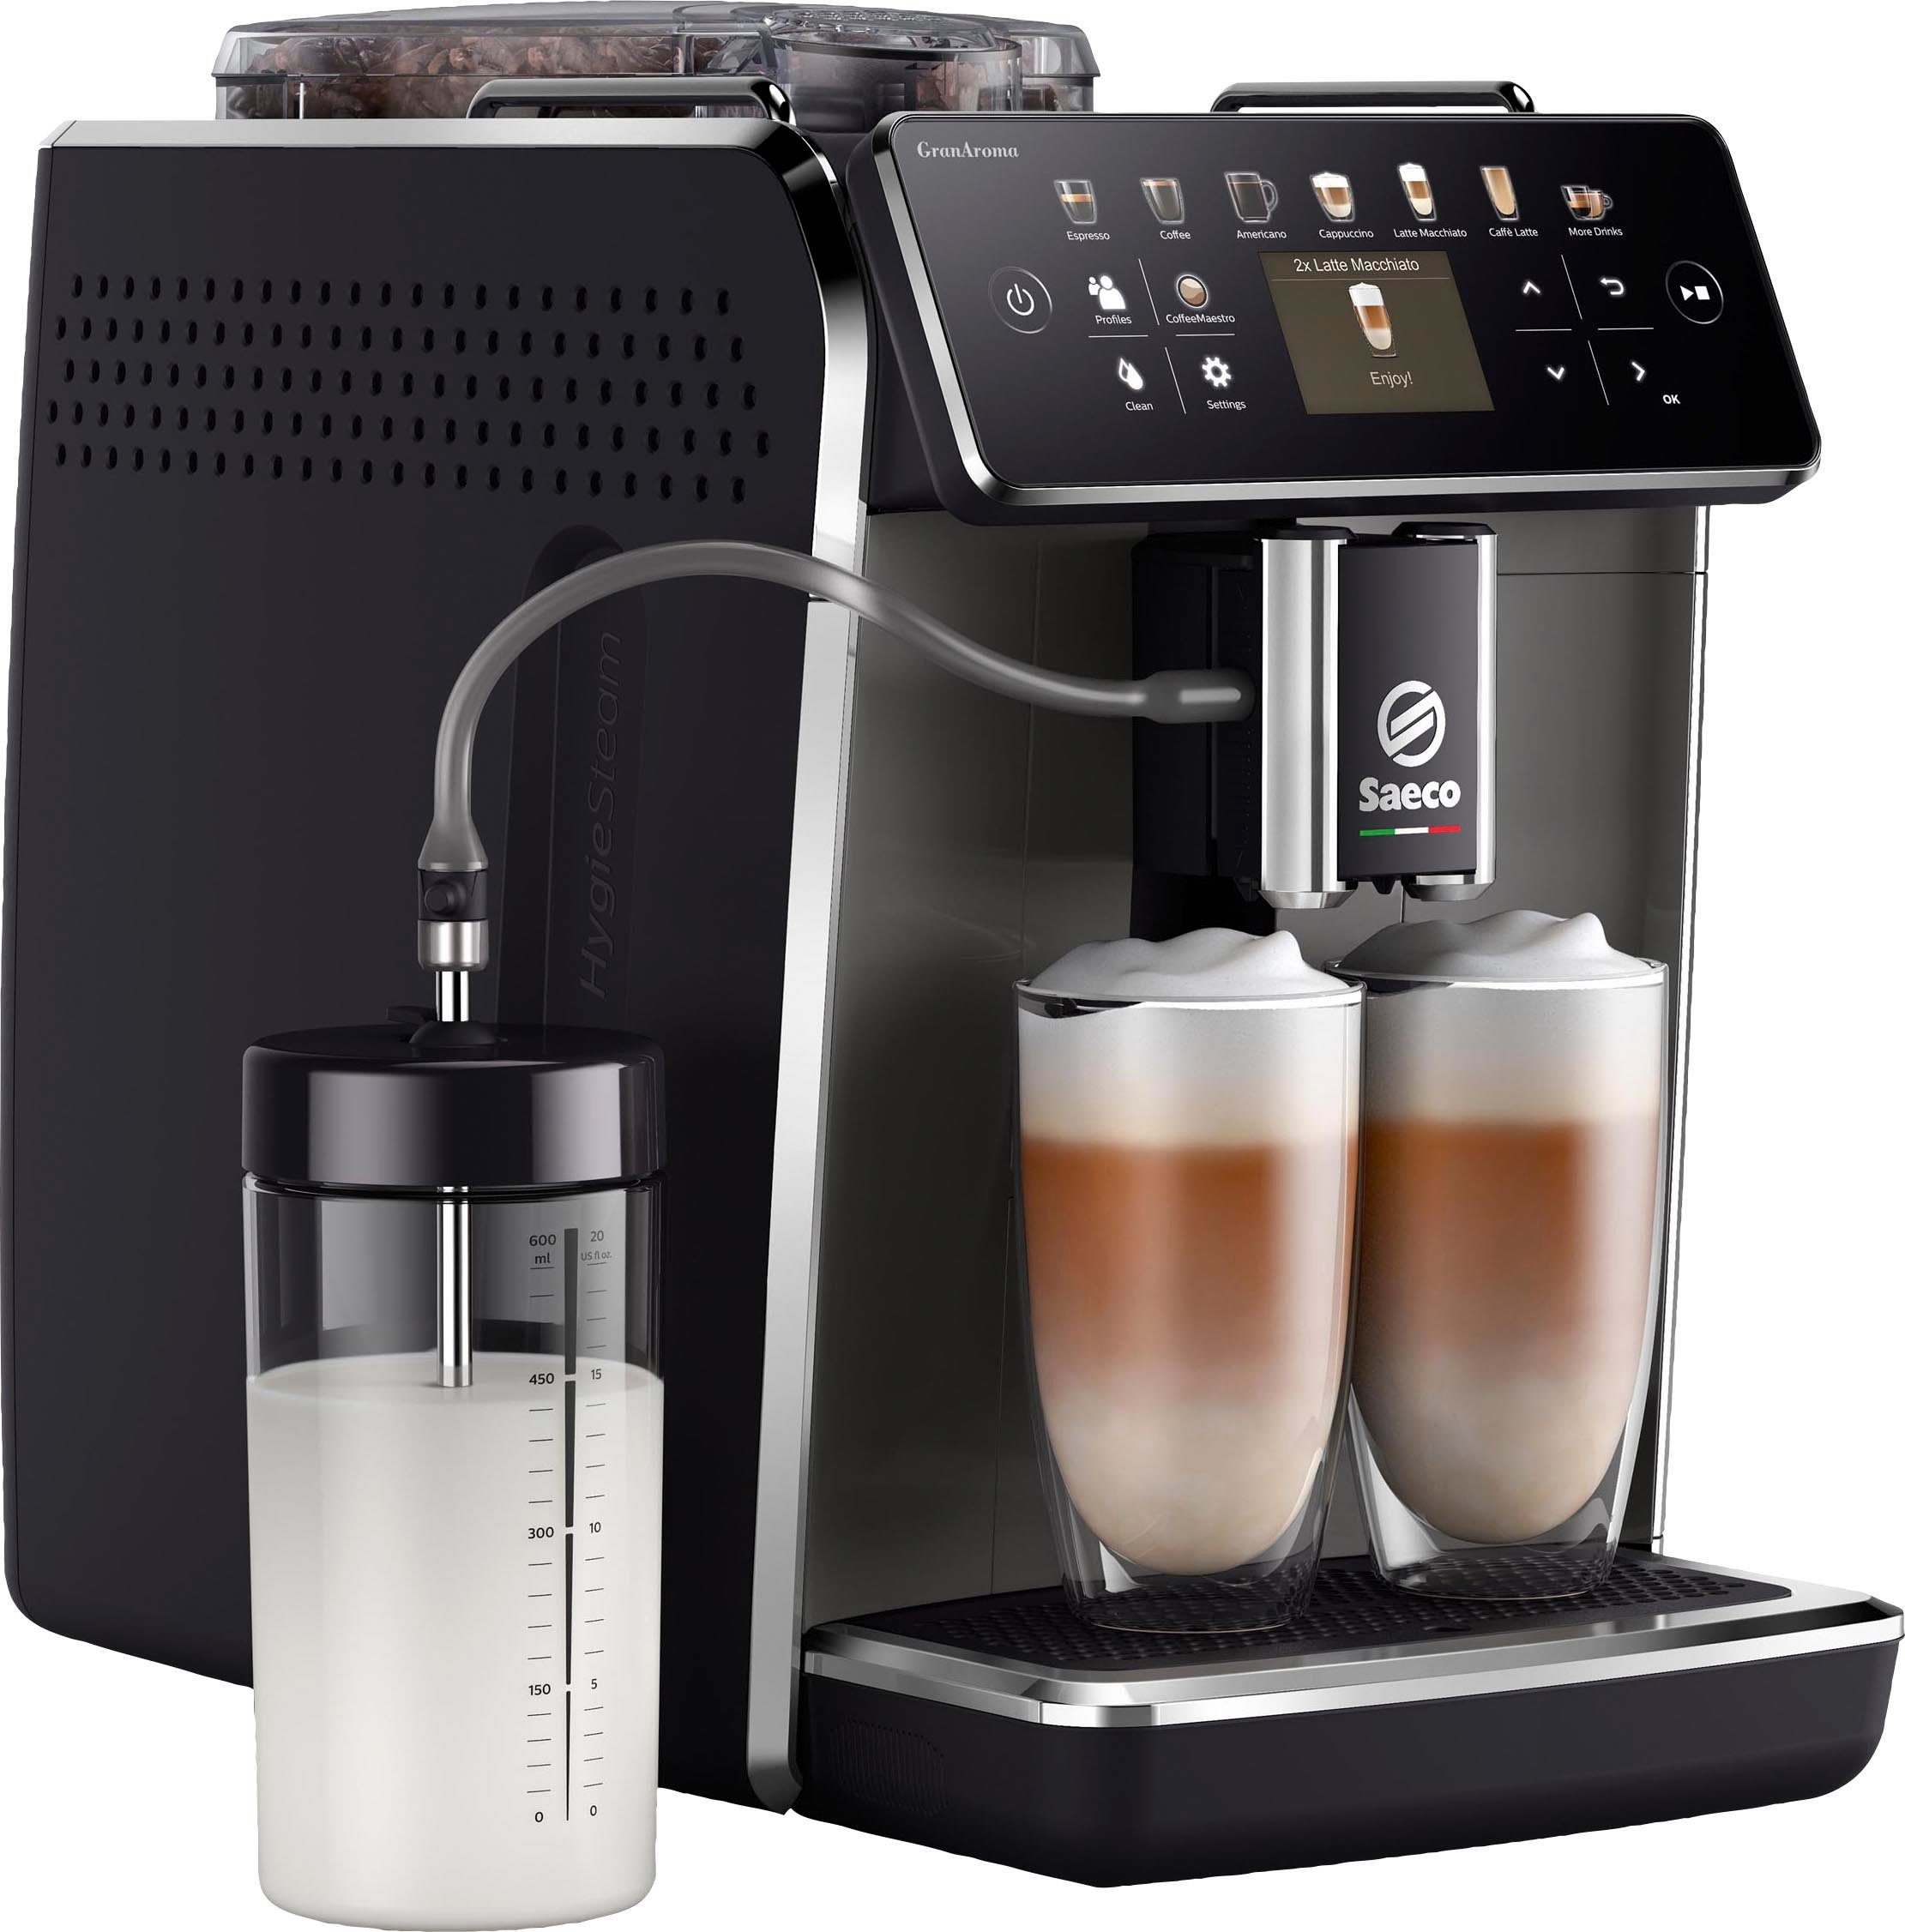 Saeco Kaffeevollautomat GranAroma SM6580/50, für 14 Kaffeespezialitäten, mit 4 Benutzerprofilen und TFT Display | Kaffeevollautomaten